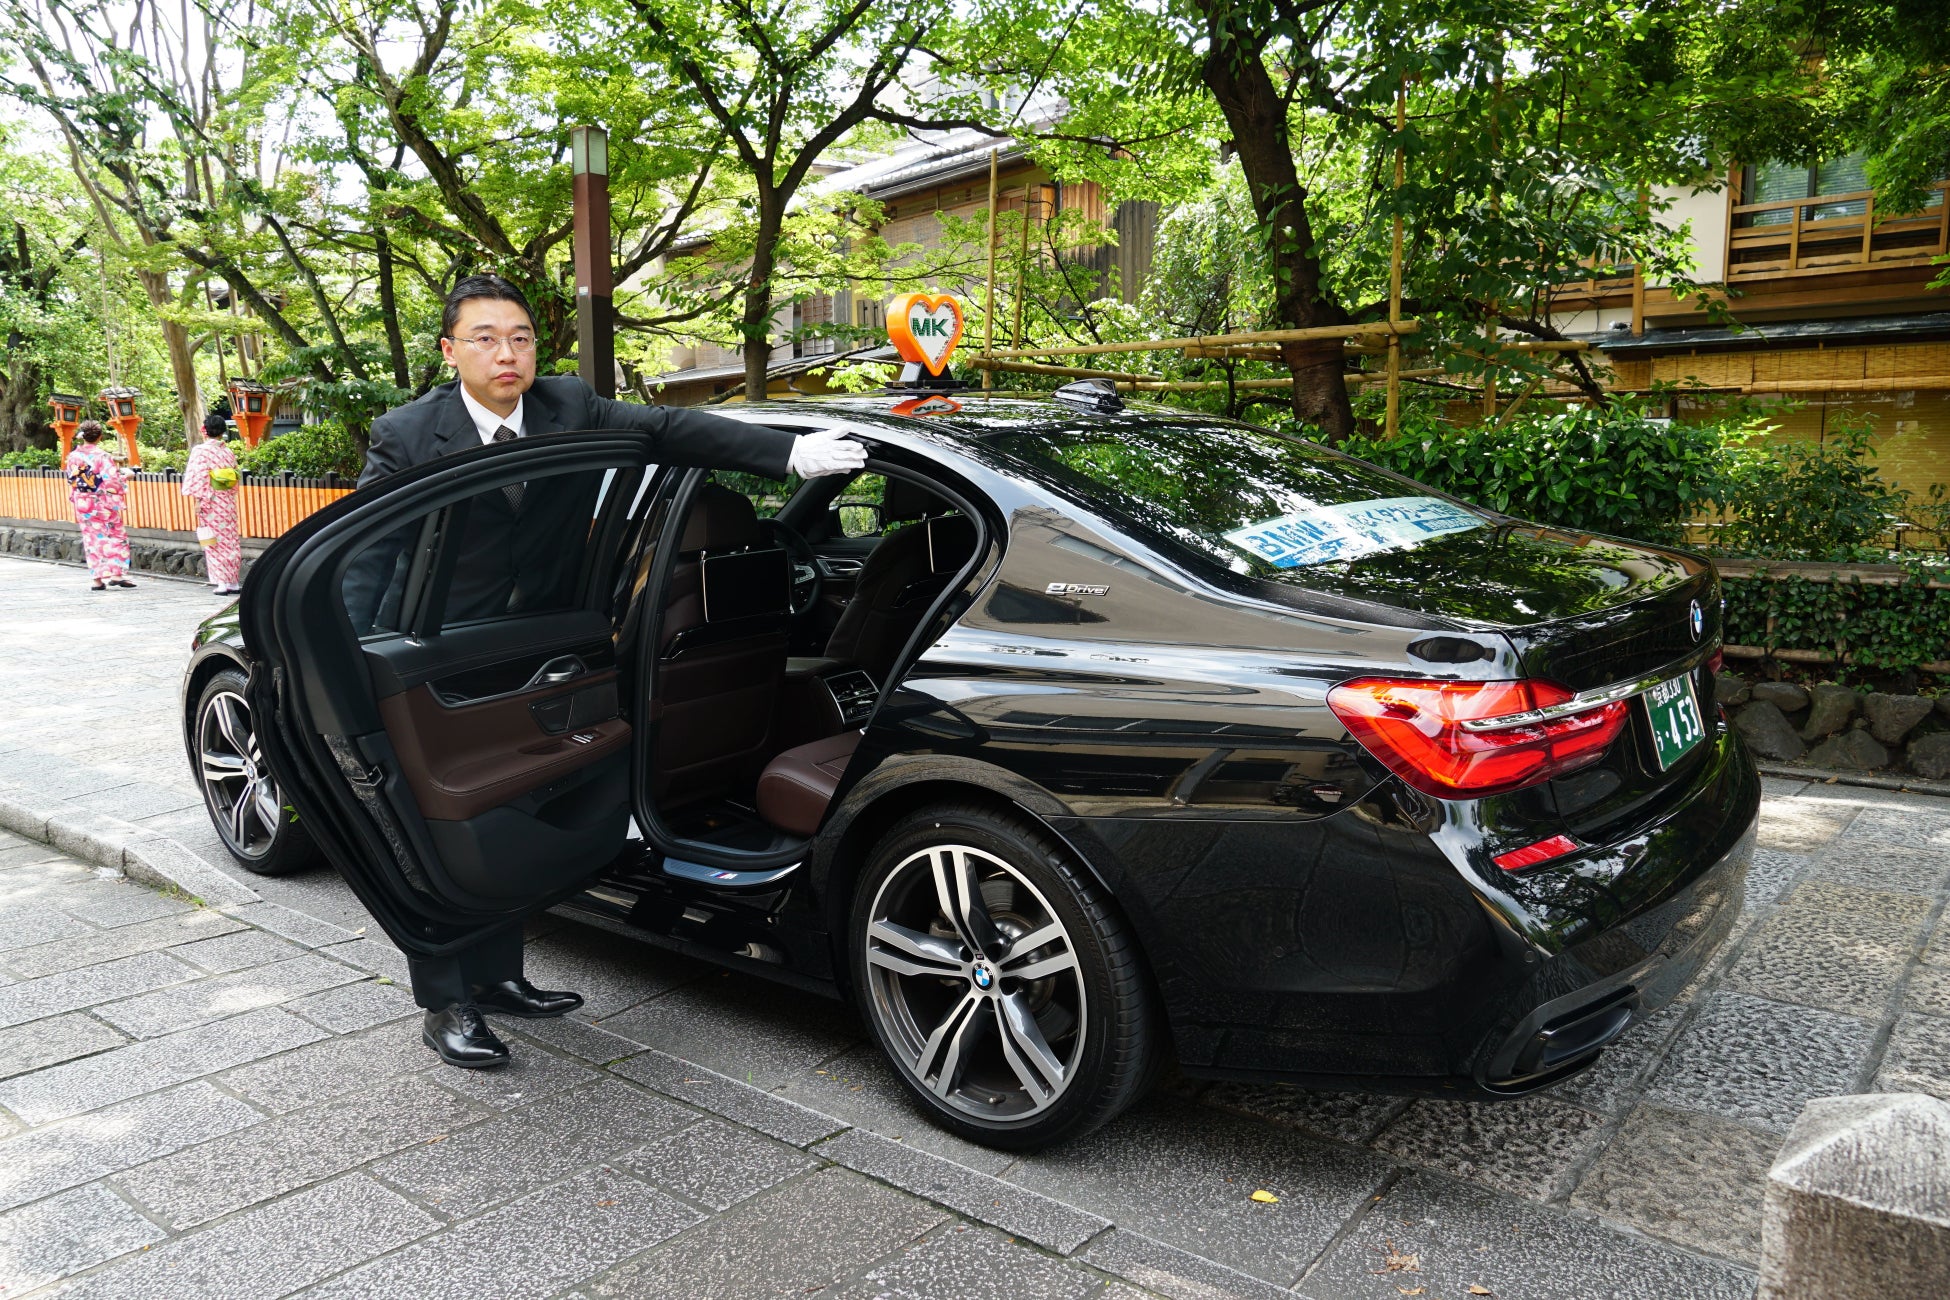 HyundaiとMKタクシーのコラボレーションが実現　環境モデル都市・京都市にてEV「IONIQ 5」の導入決定のサブ画像1